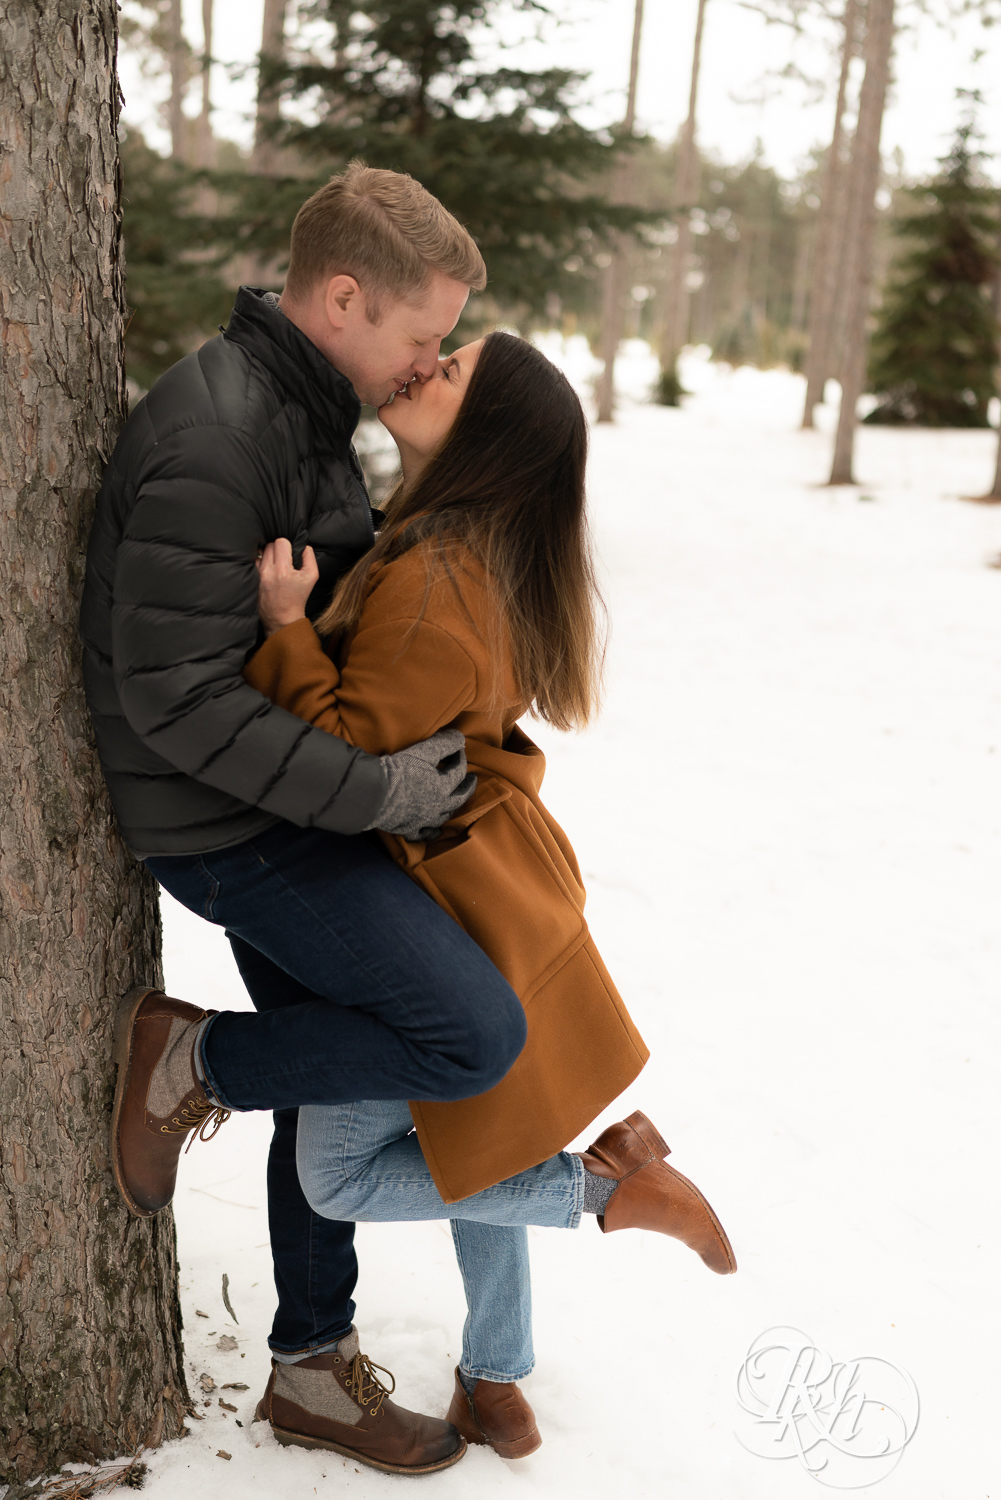 Man and woman kissing in the snow at Hansen Tree Farm in Anoka, Minnesota.